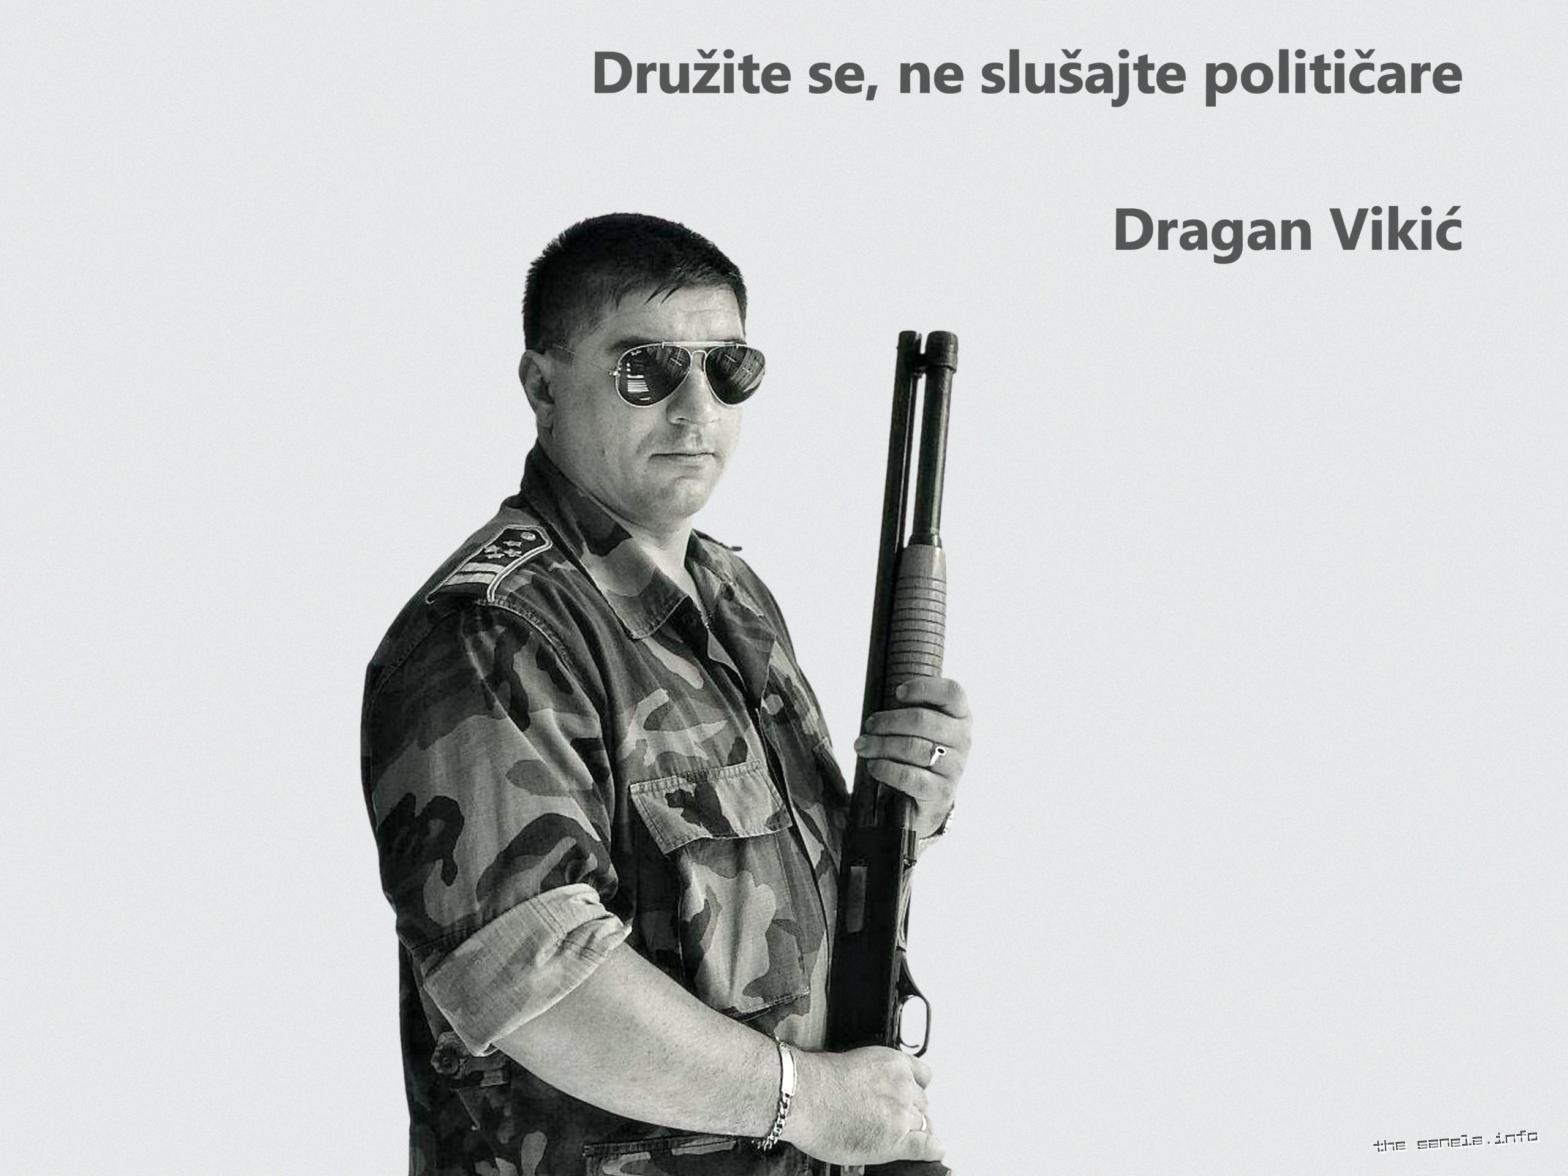 Dragan Vikiċ